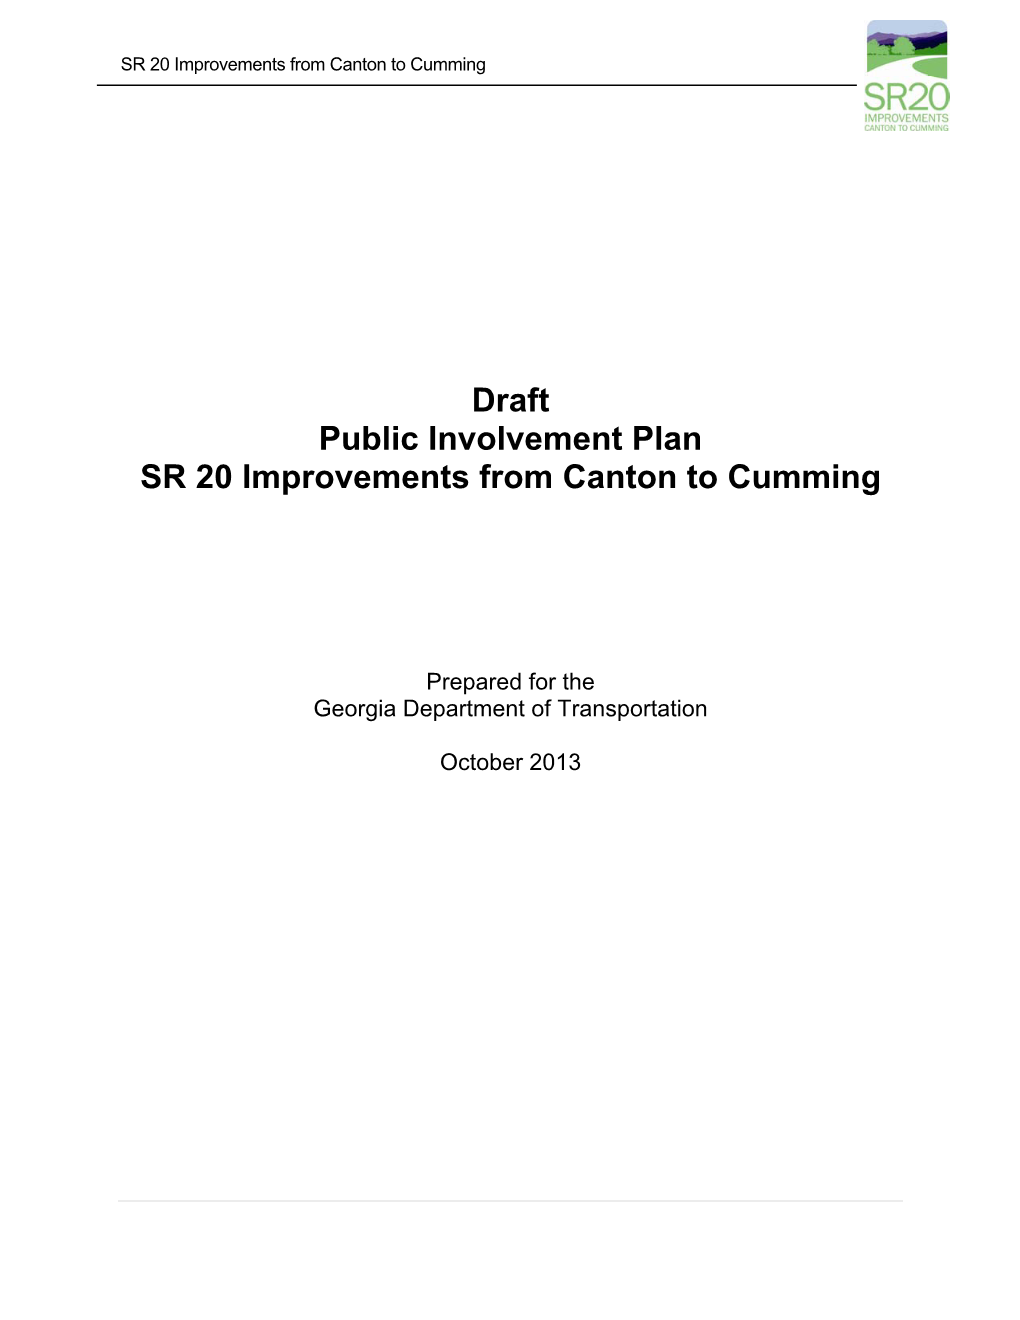 Draft Public Involvement Plan SR 20 Improvements from Canton to Cumming